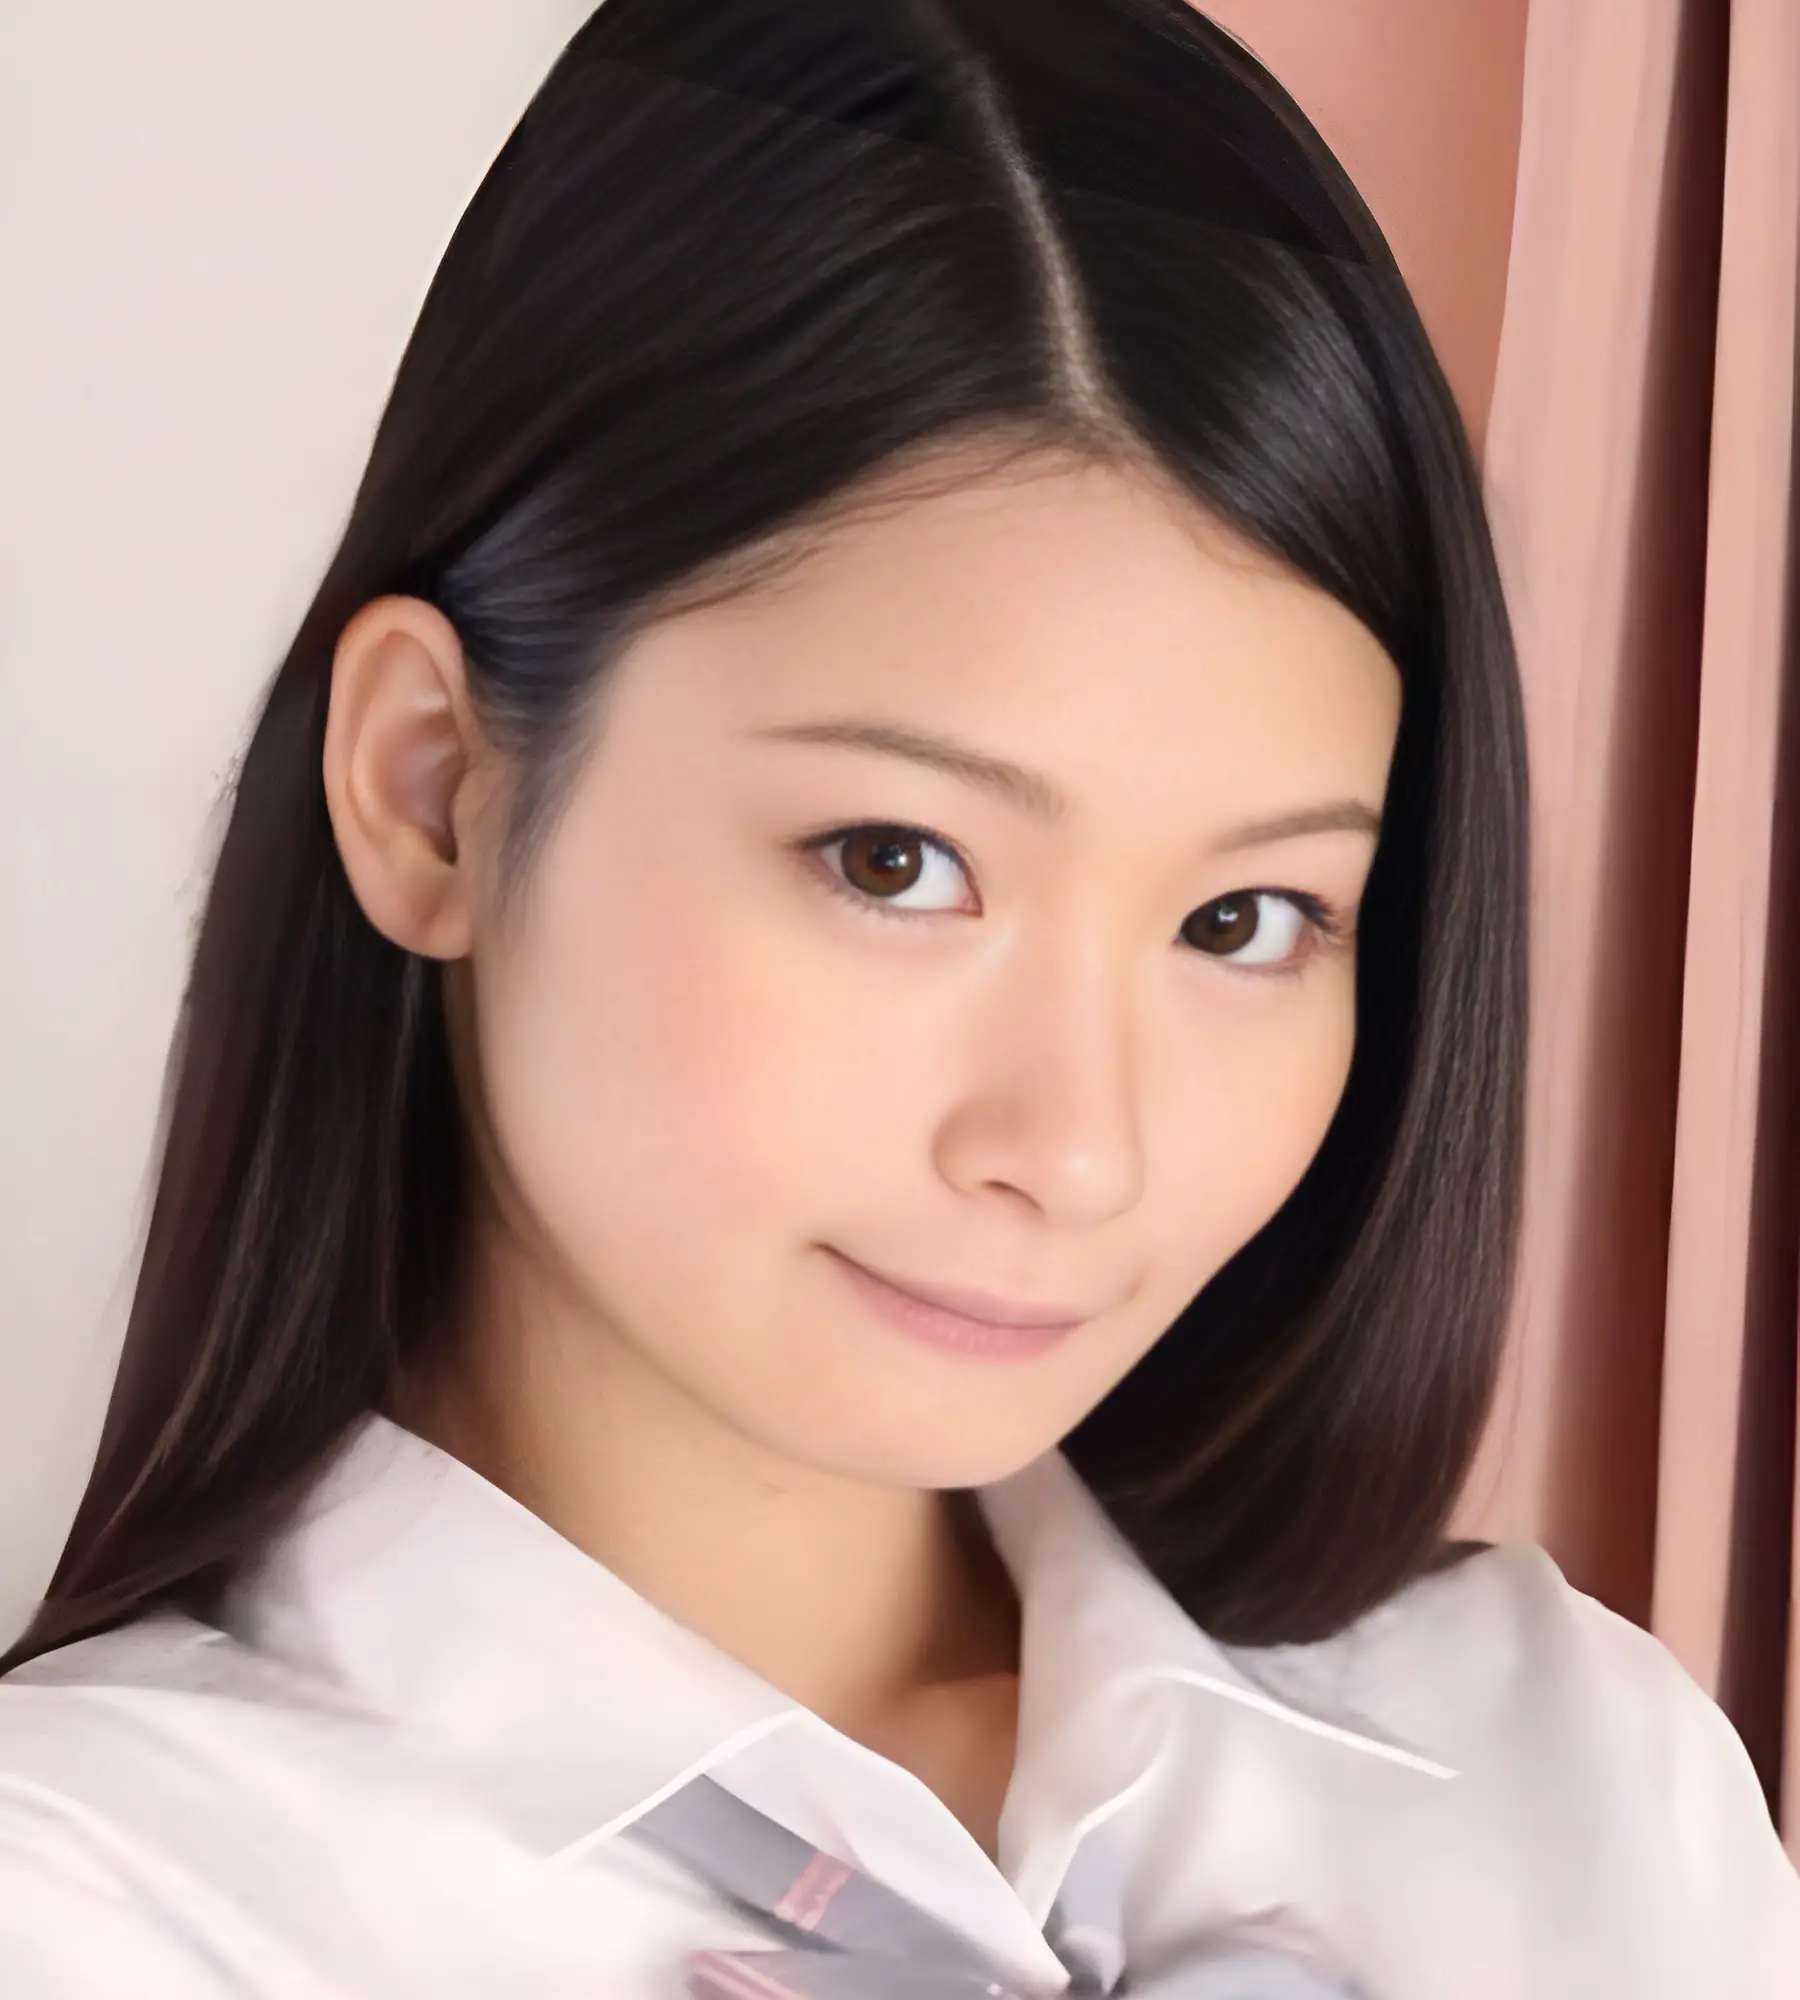 Ako Nishino (Actress) Age, Height, Weight, Wiki, Biography, Boyfriend, Career and More